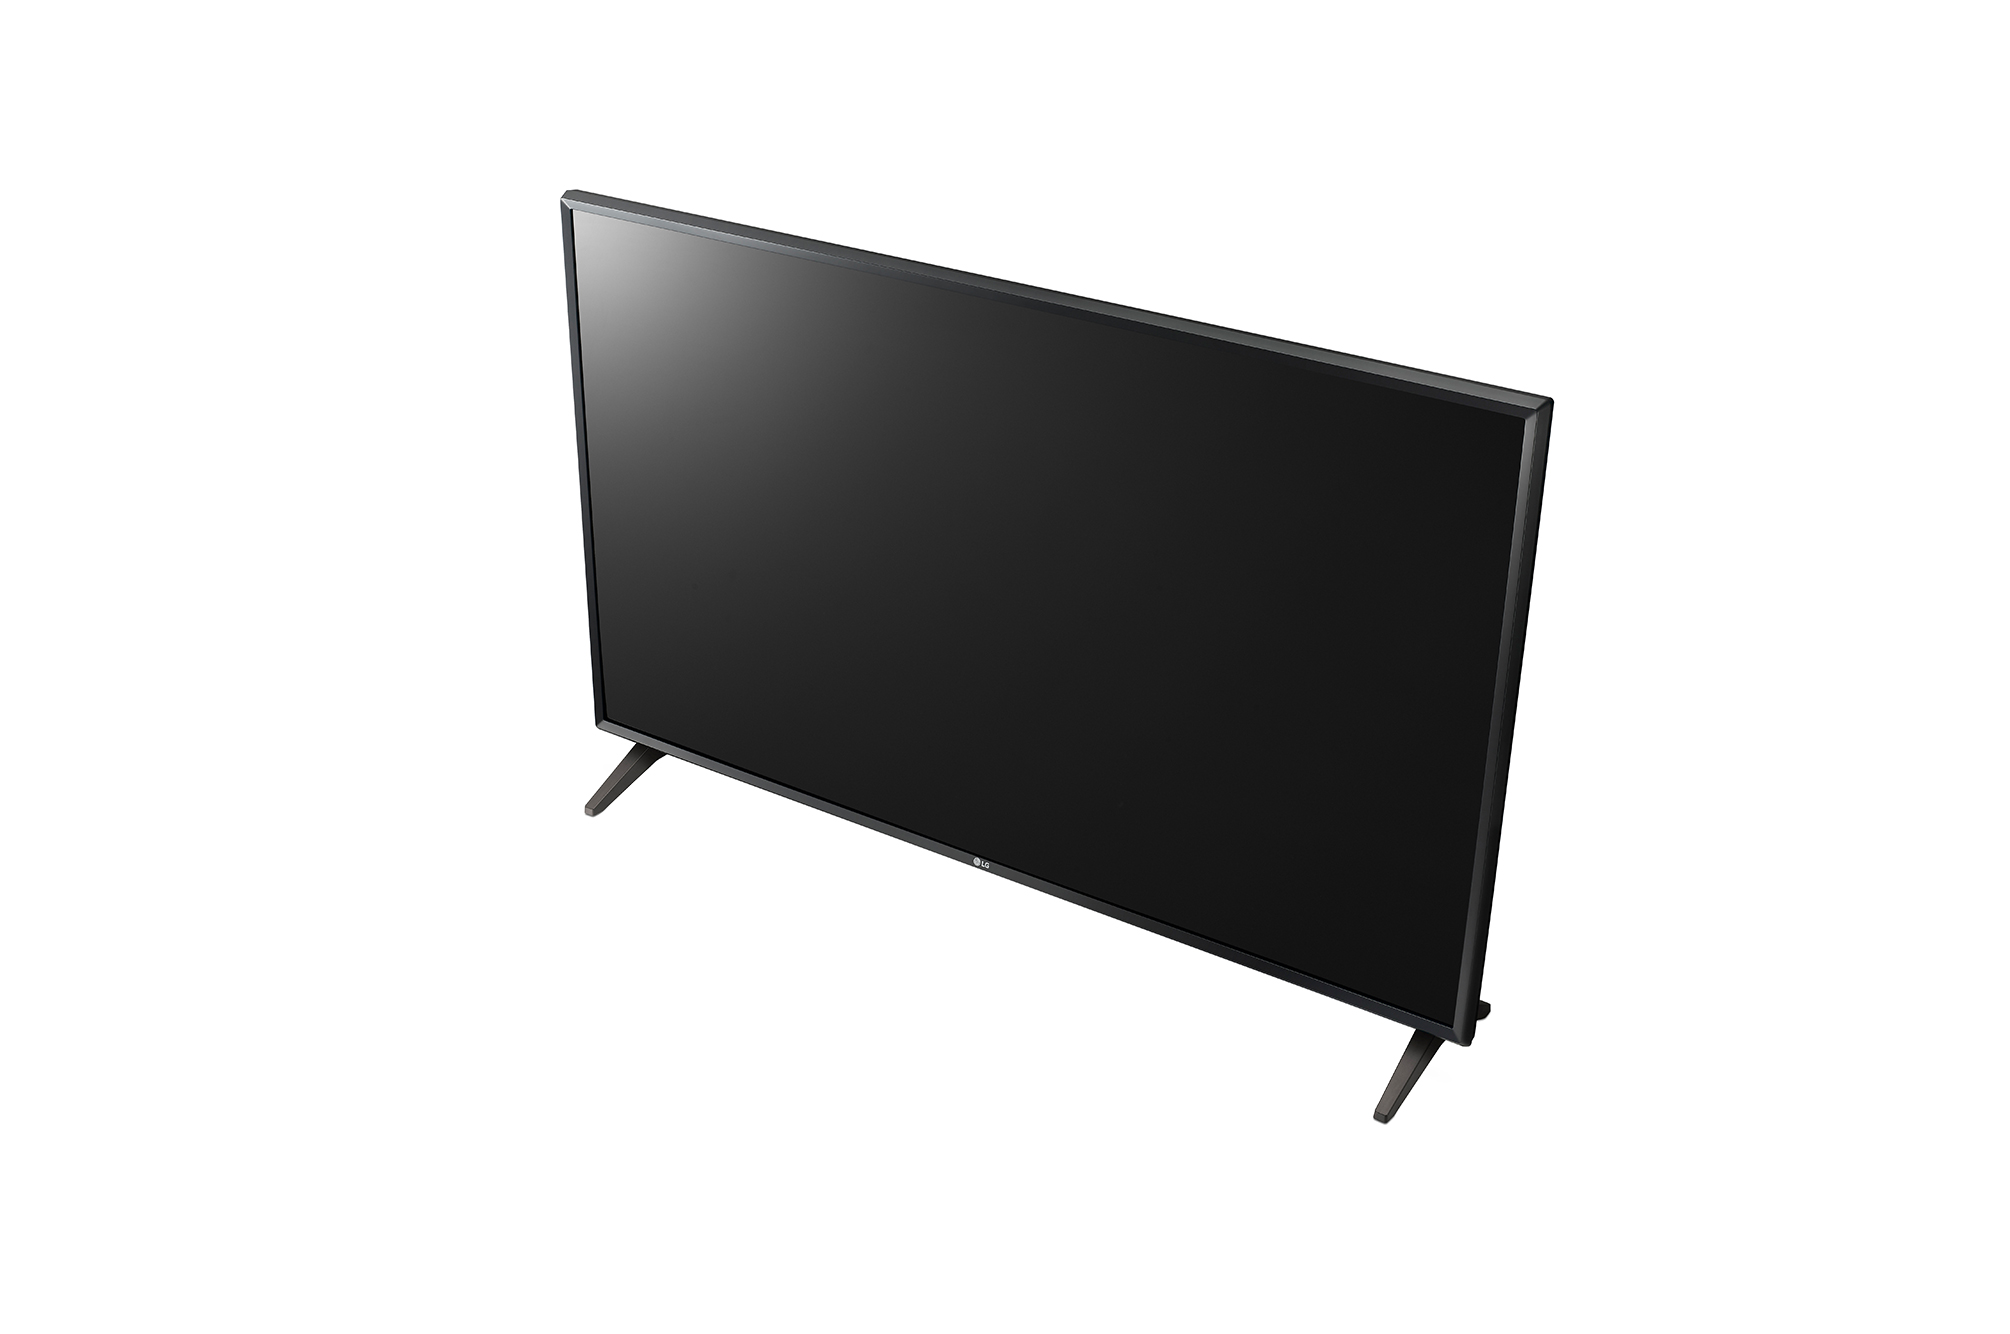 LG 32 1366x768 Commercial TV - Ceramic Black - 32LN340CBUD